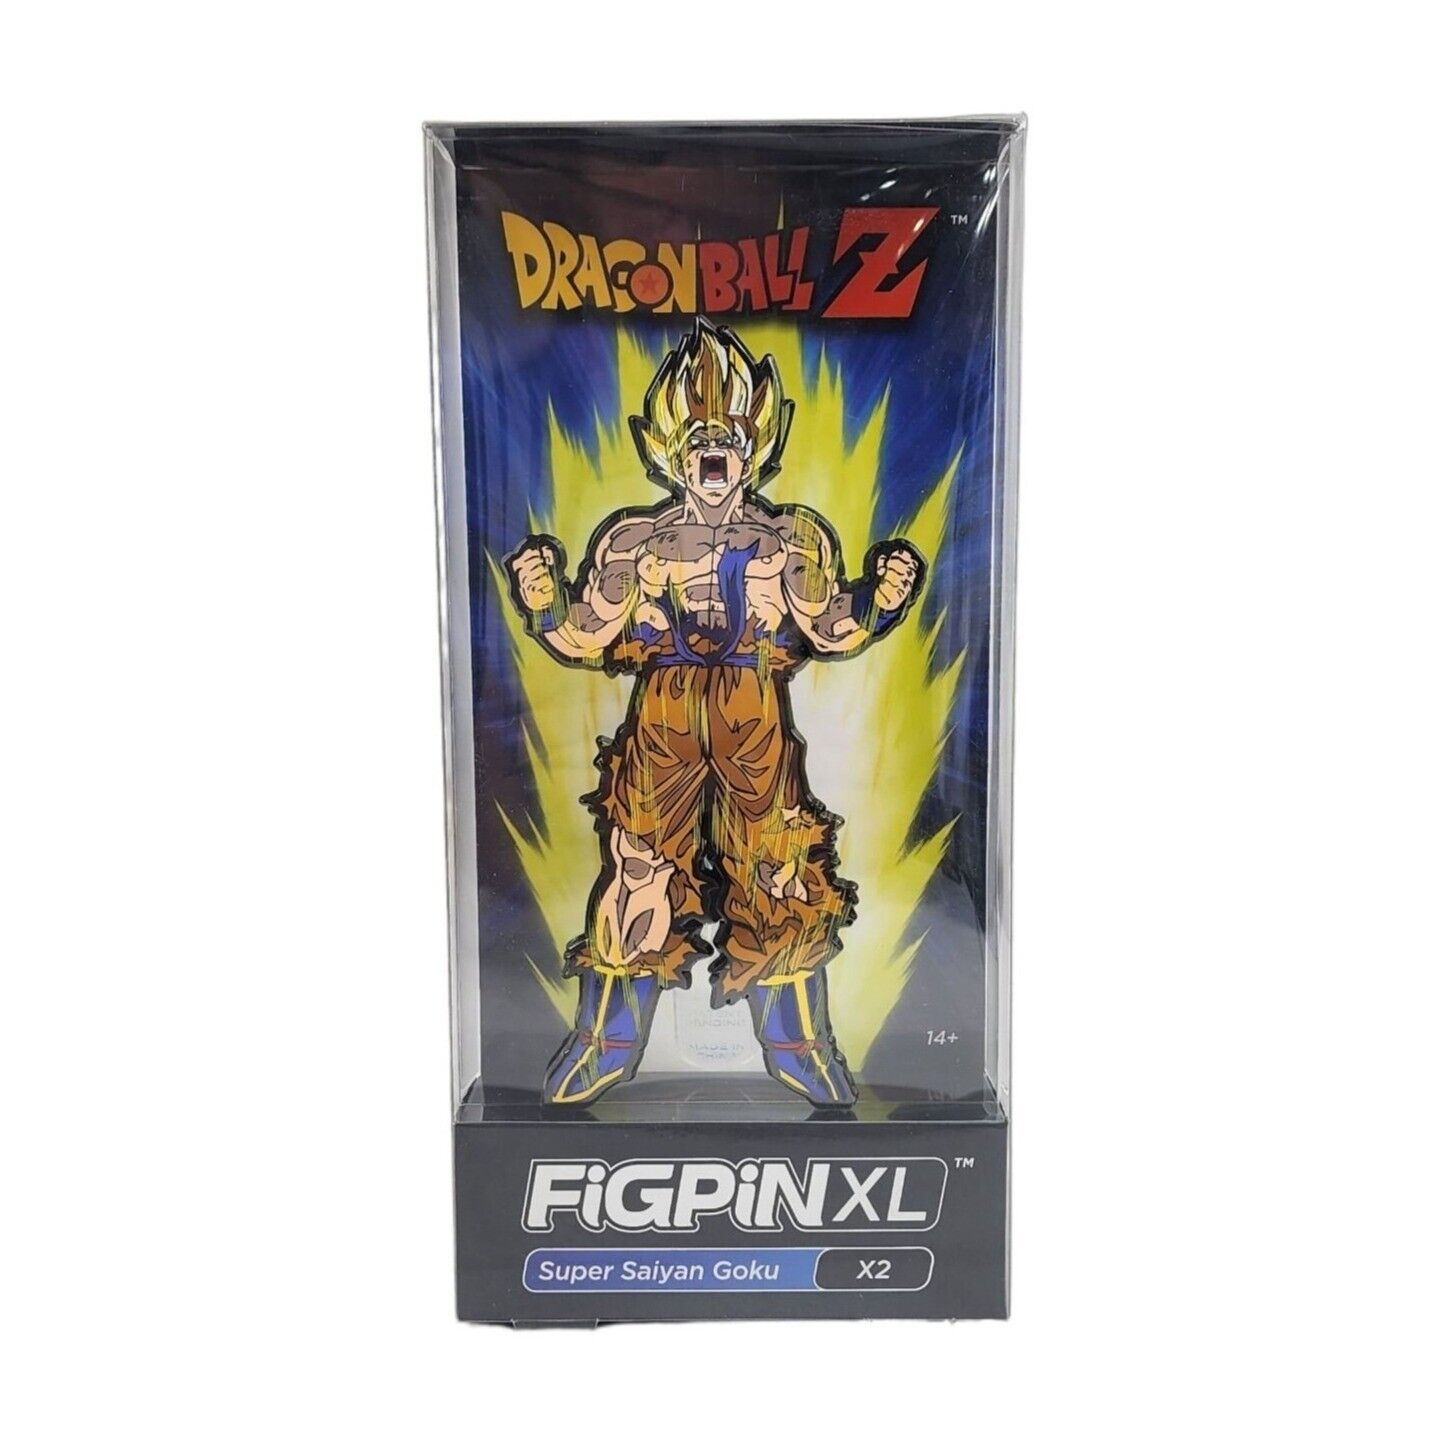 Figpin XL Dragonball Z Super Saiyan Goku X2